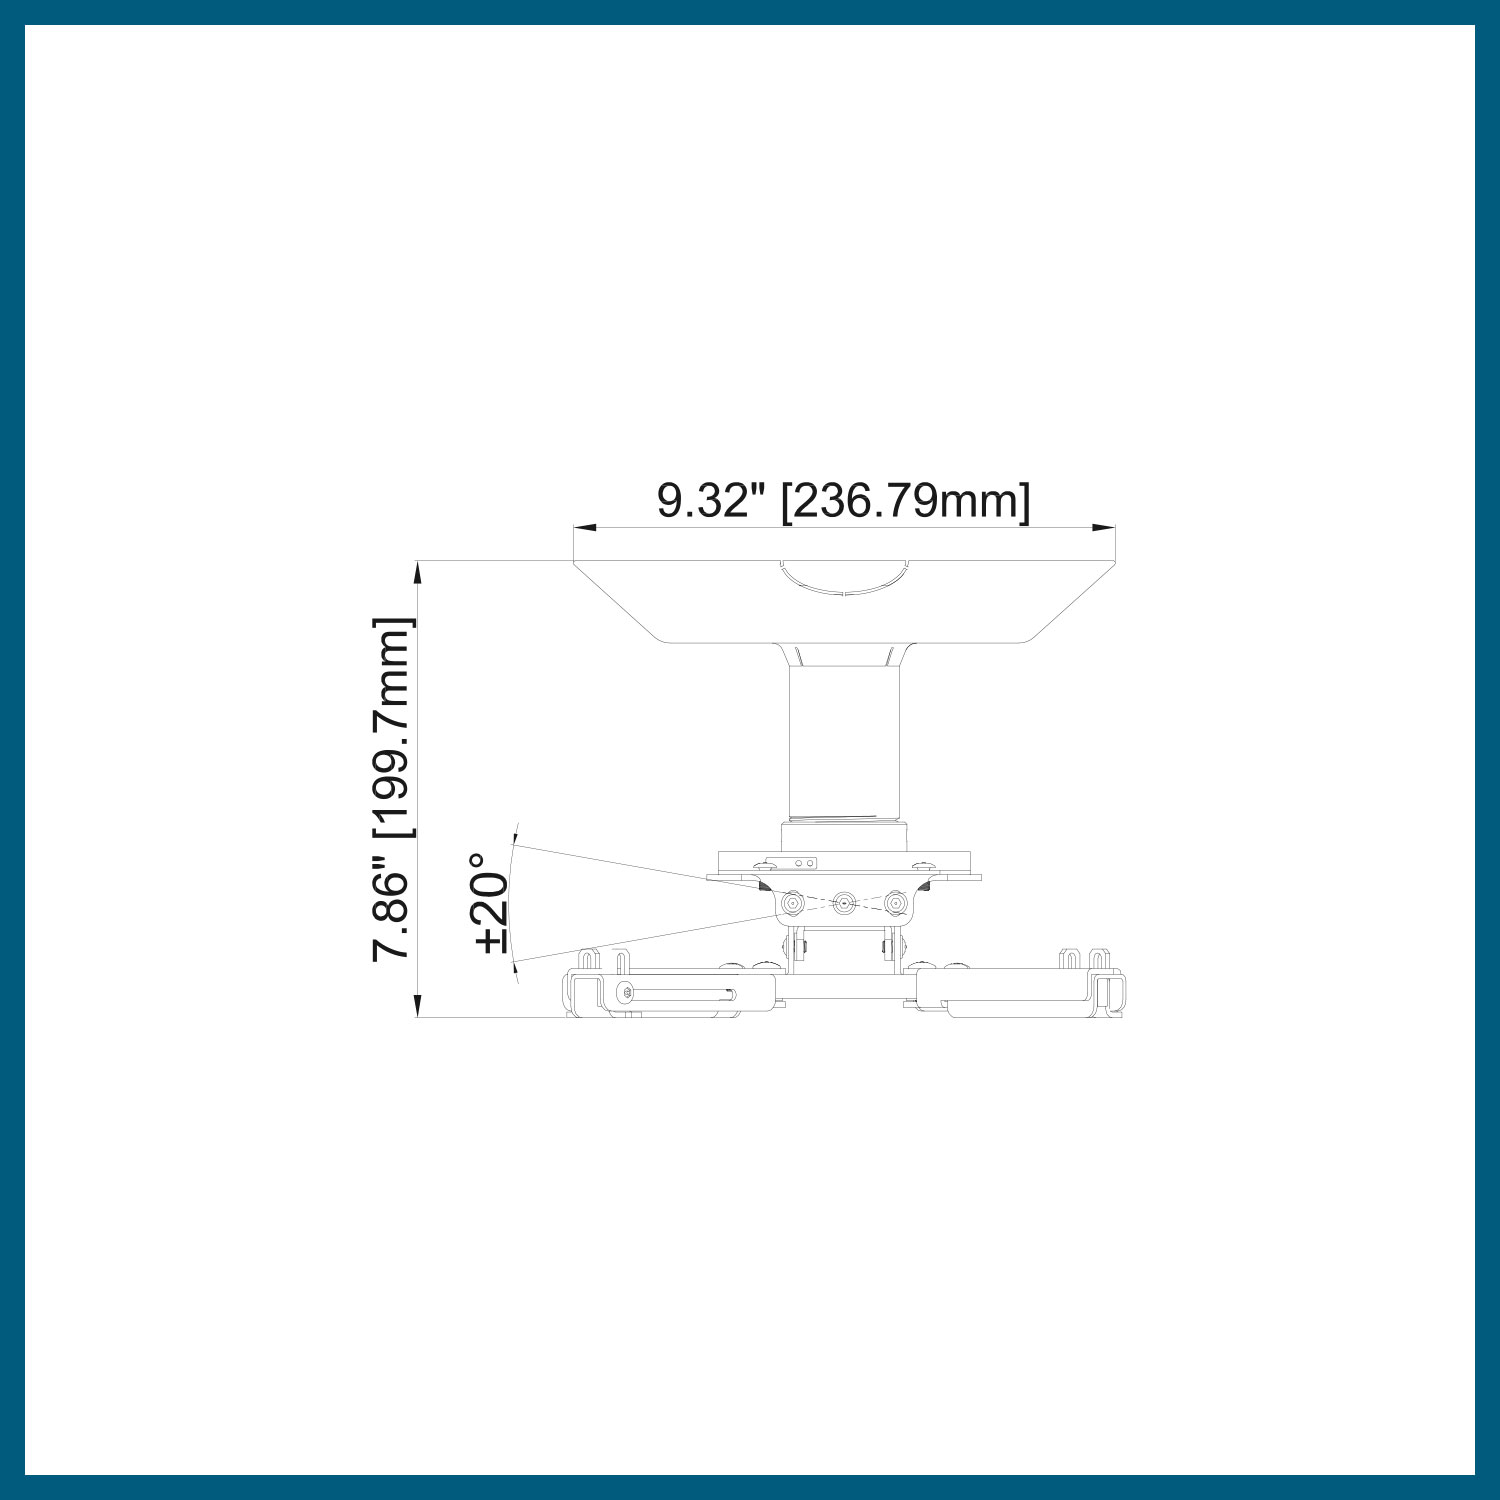 QualGear Pro-AV QG-KIT-CA-3IN-B Projector Mounting Kit - Projector Mount, Single Joist Ceiling Adapter, 3 inch 1.5-Inch NPT Threaded Pipe in Black